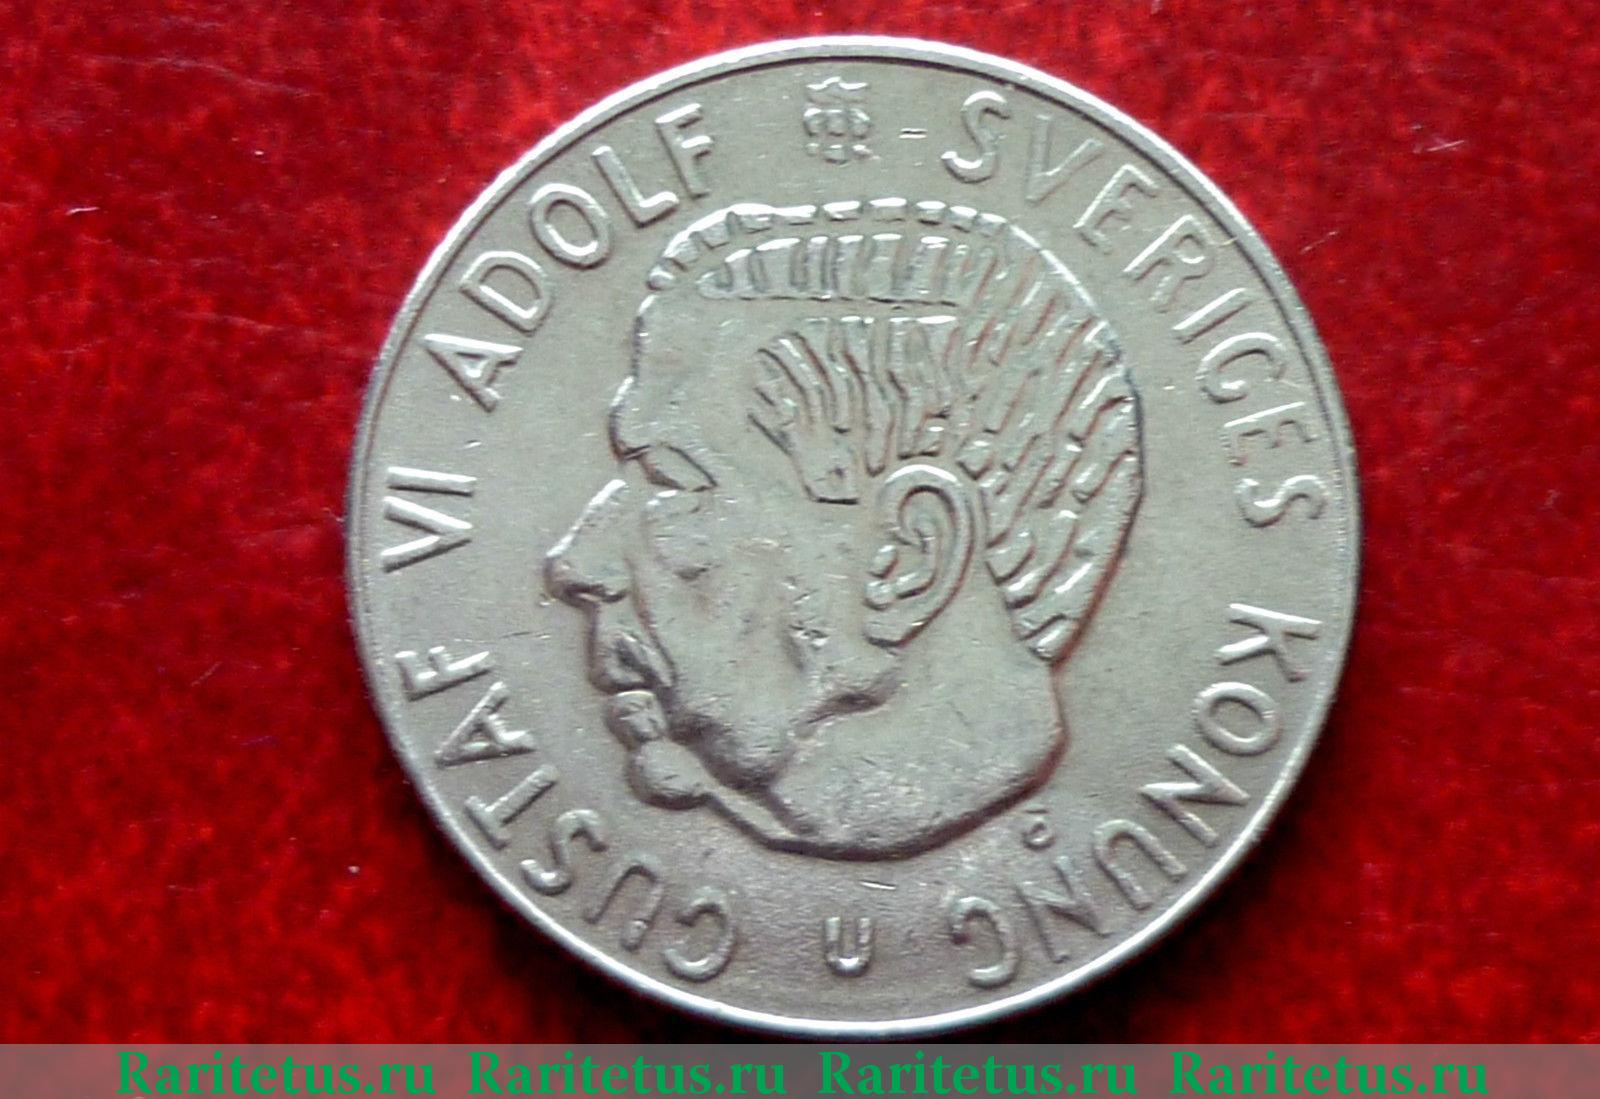 gustaf vi adolf coin 1969 value